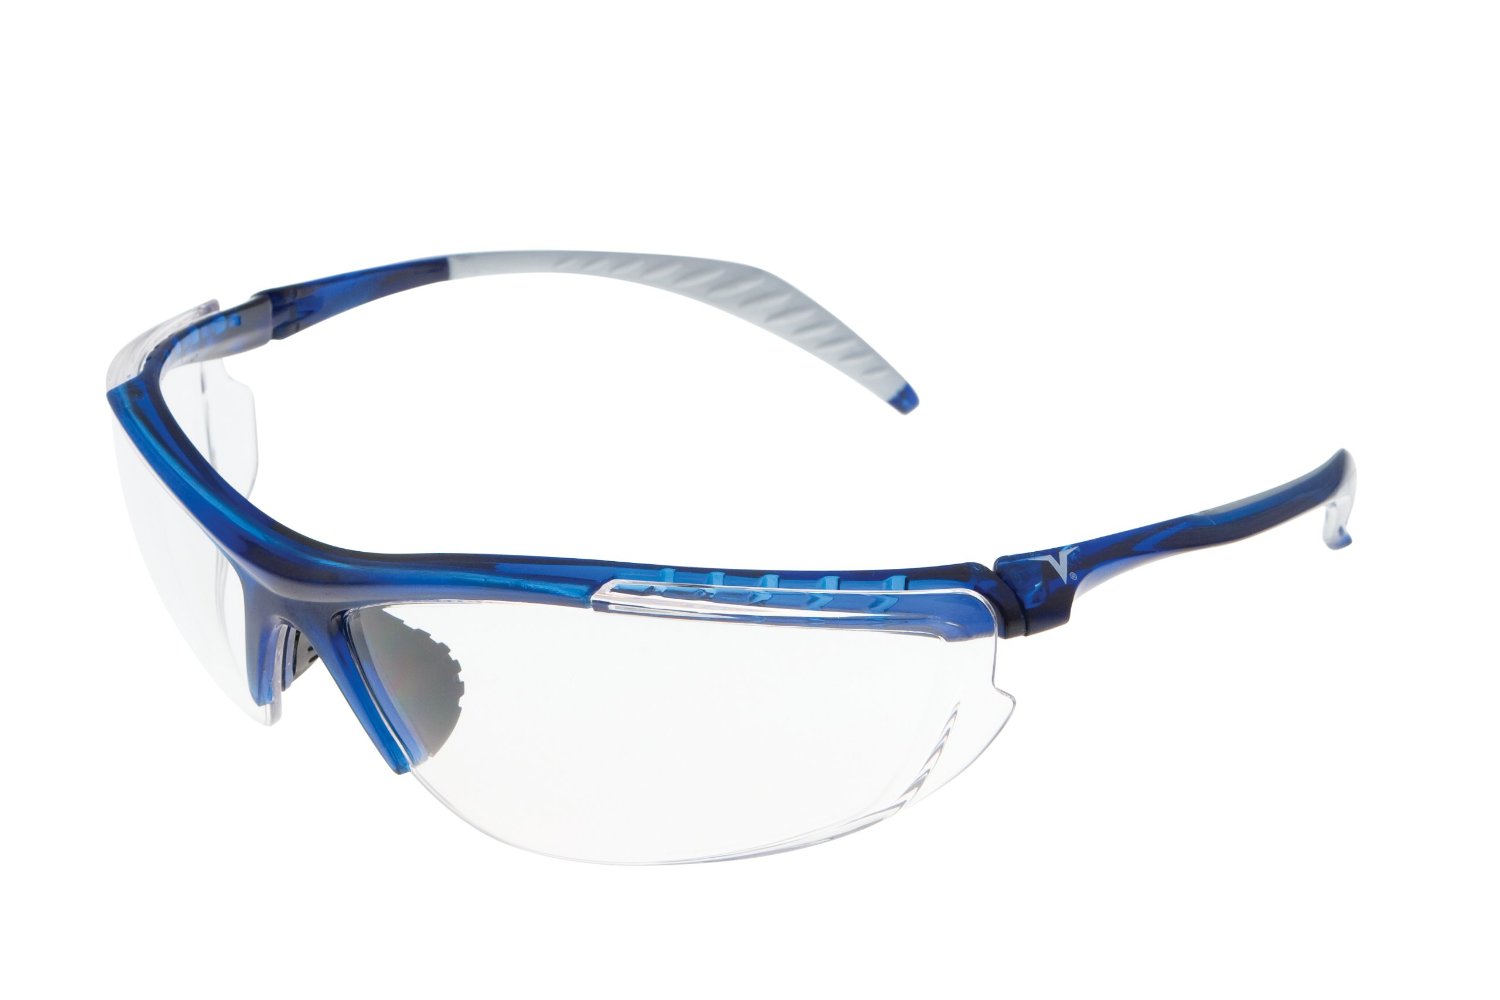 Encon Wraparound Veratti 307 Safety Glasses, Clear Lens, Cool Blue Frame